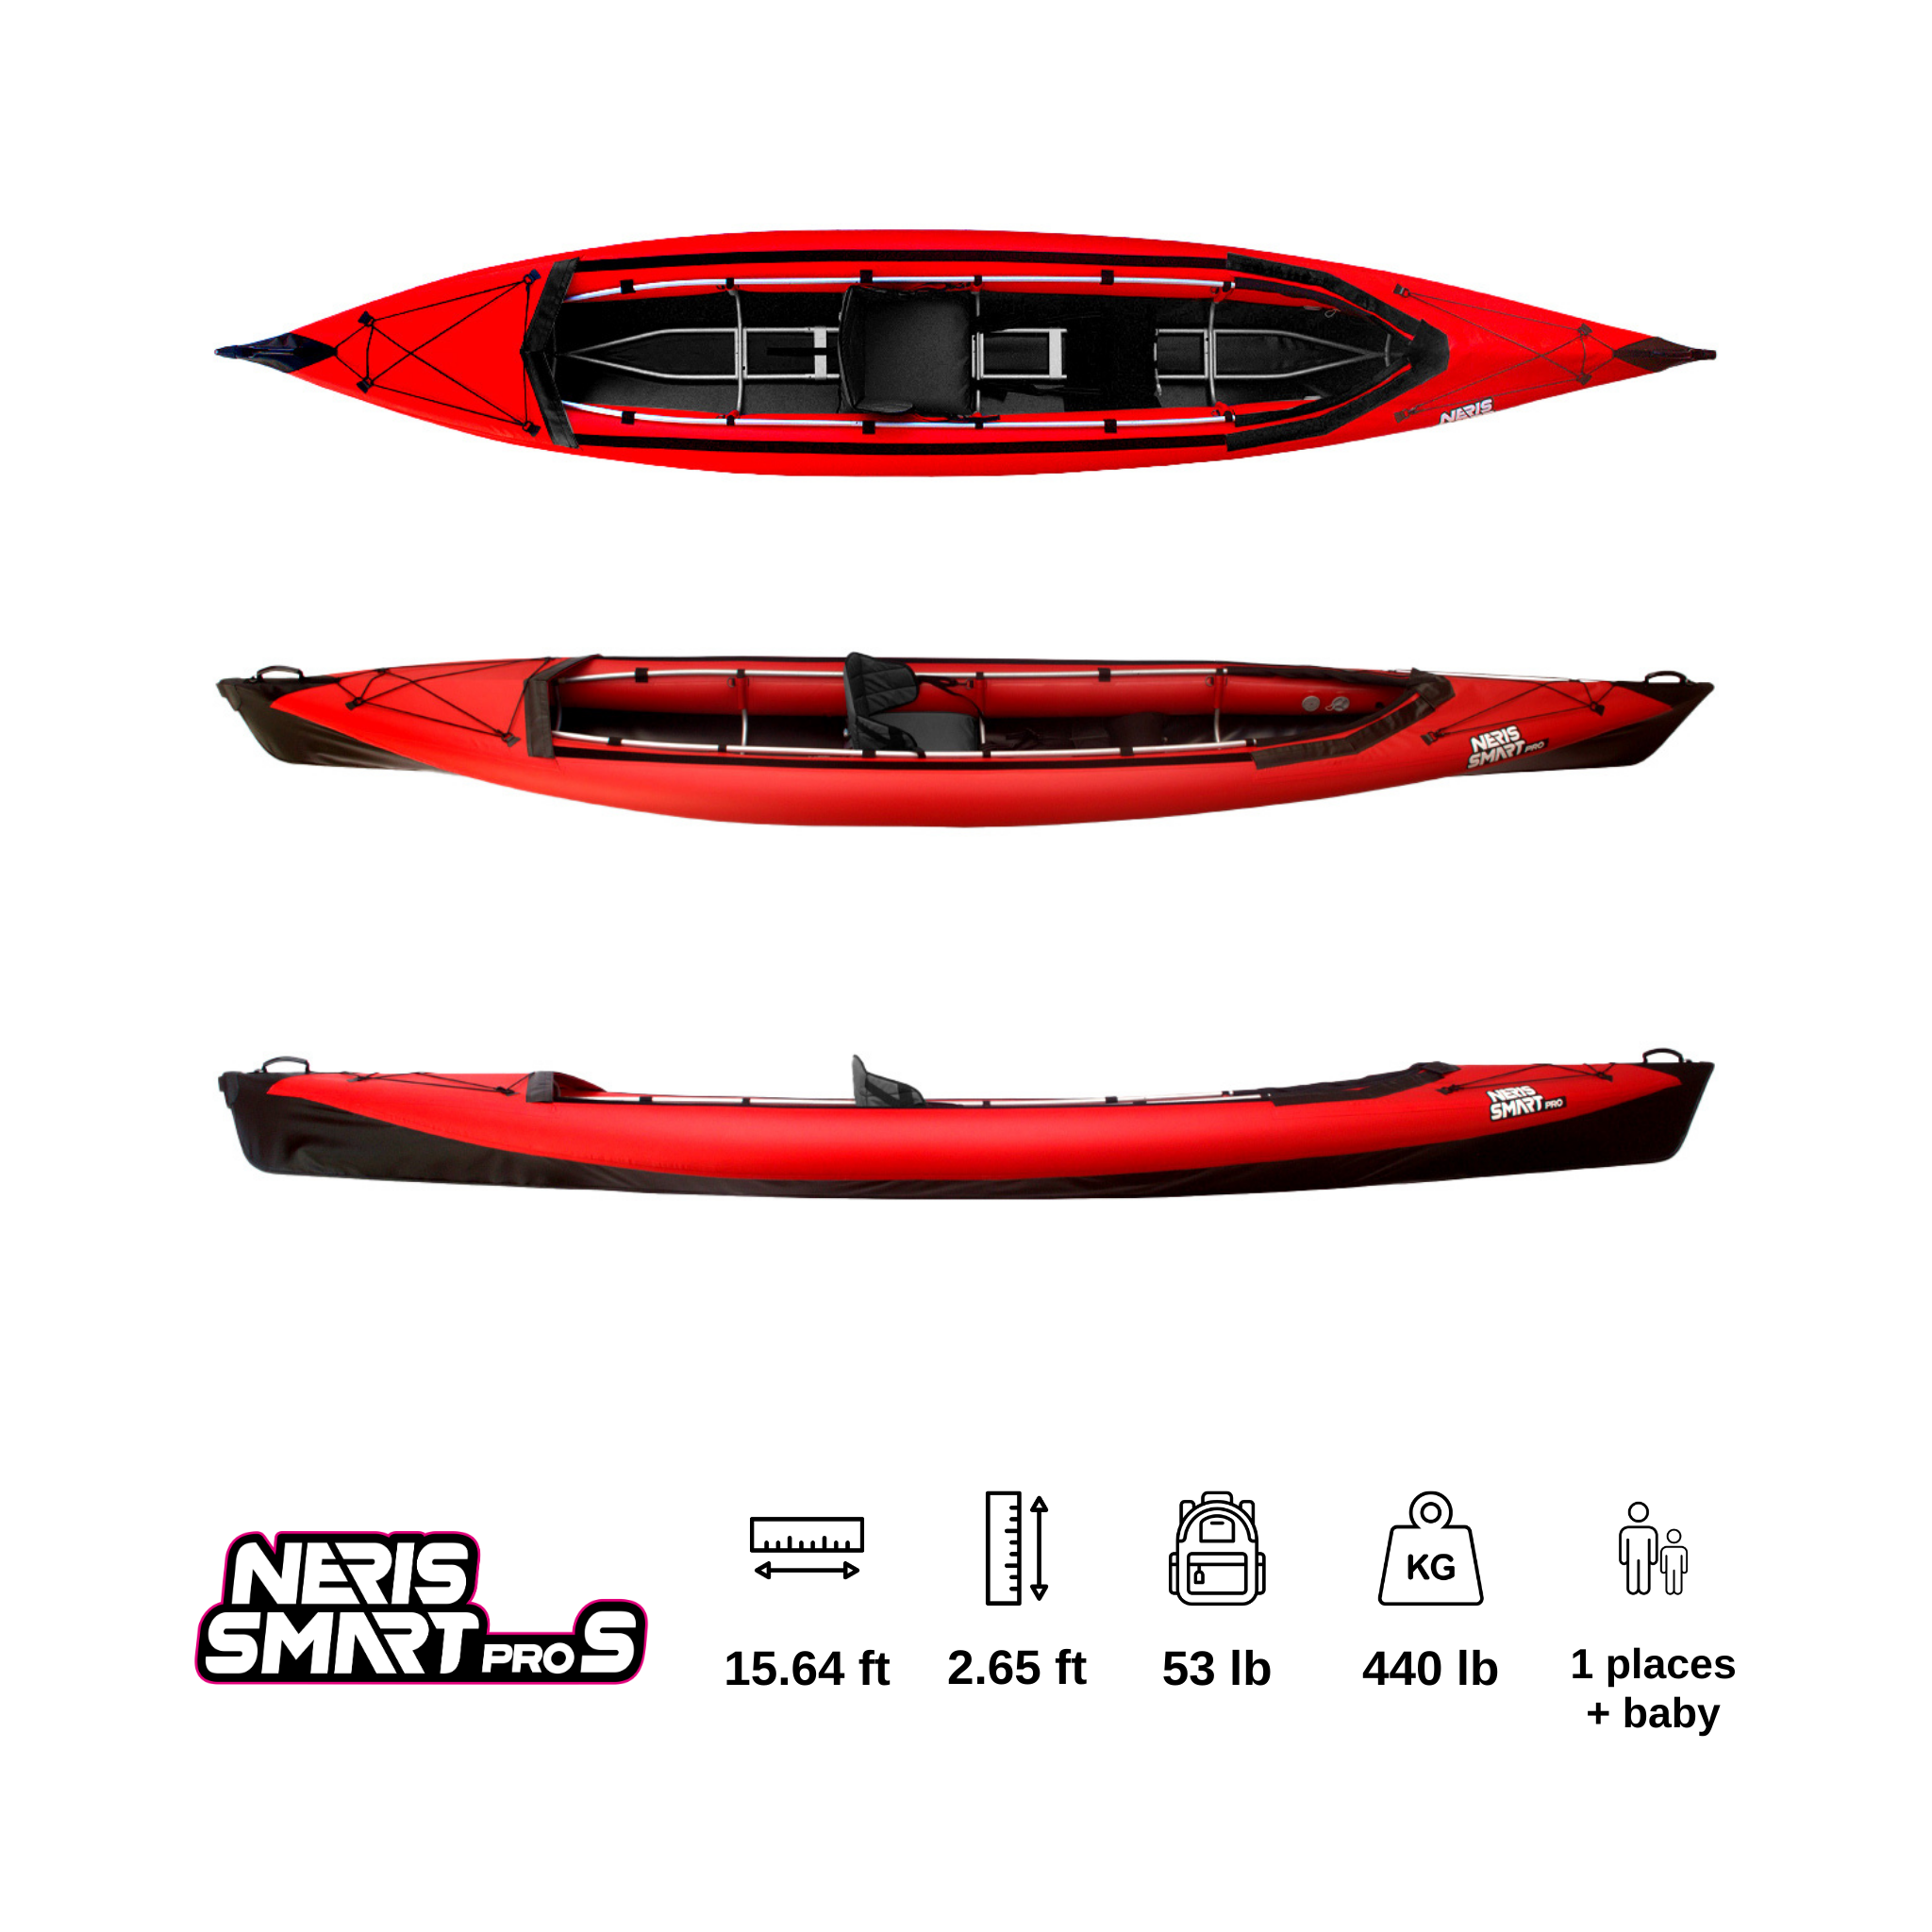 Single person Neris Foldable kayak, Neris smart pro S. Red top, black bottom